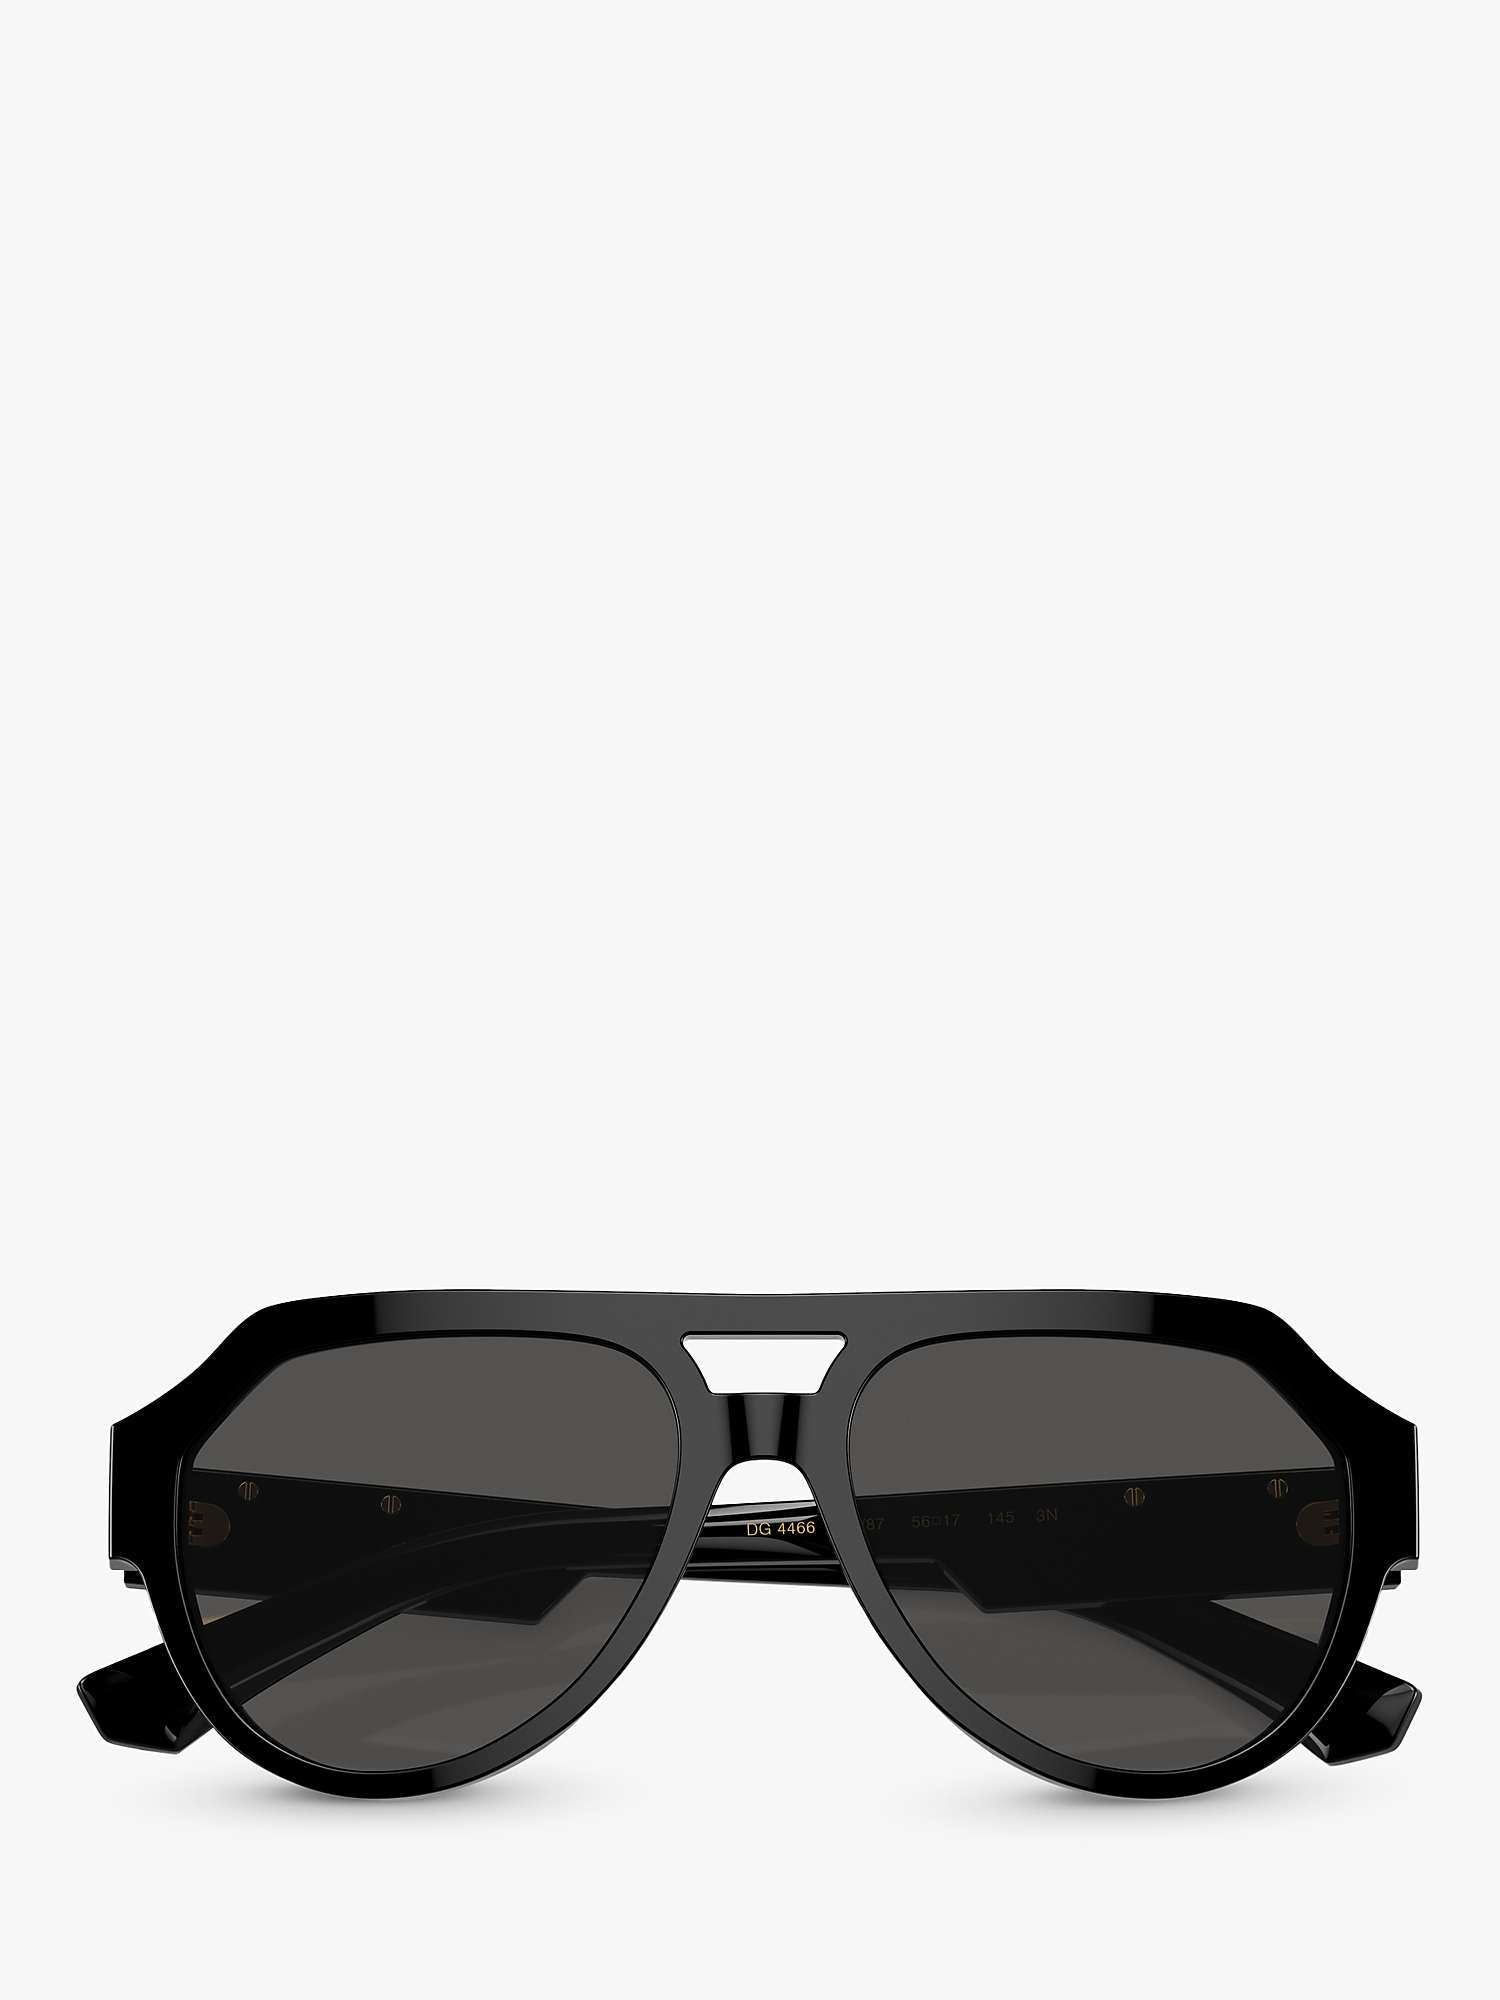 Buy Dolce & Gabbana DG4466 Men's Aviator Sunglasses, Black/Grey Online at johnlewis.com